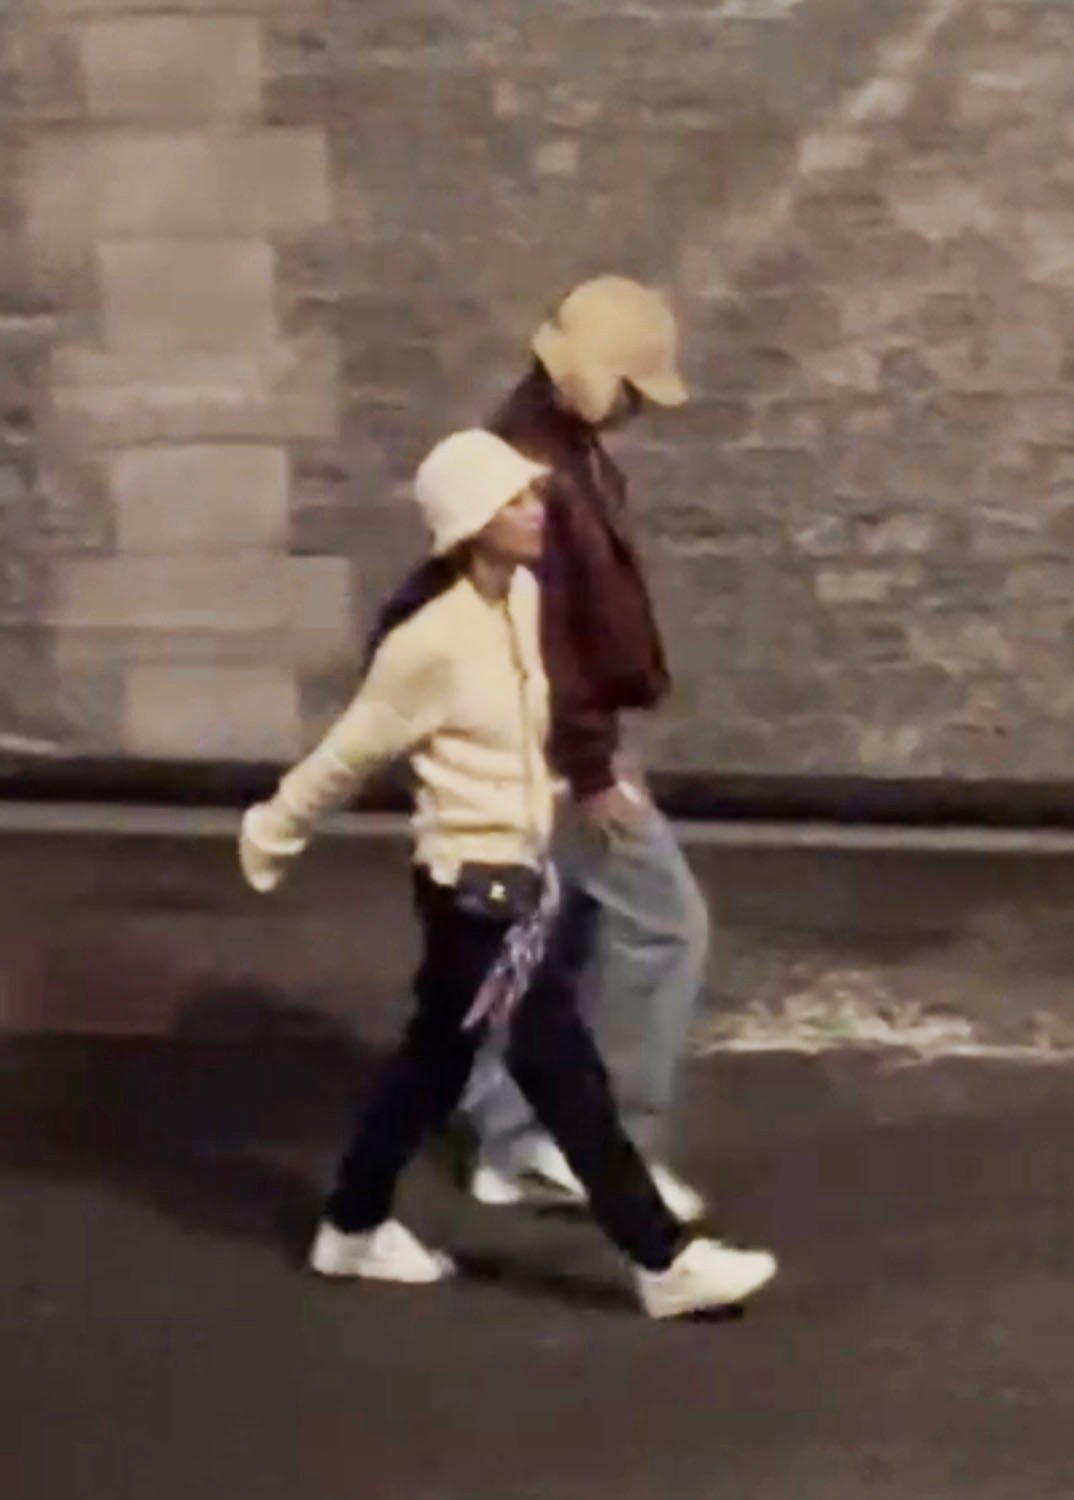 Showbiz: BlackPink's Jennie and BTS' V seen holding hands in Paris?